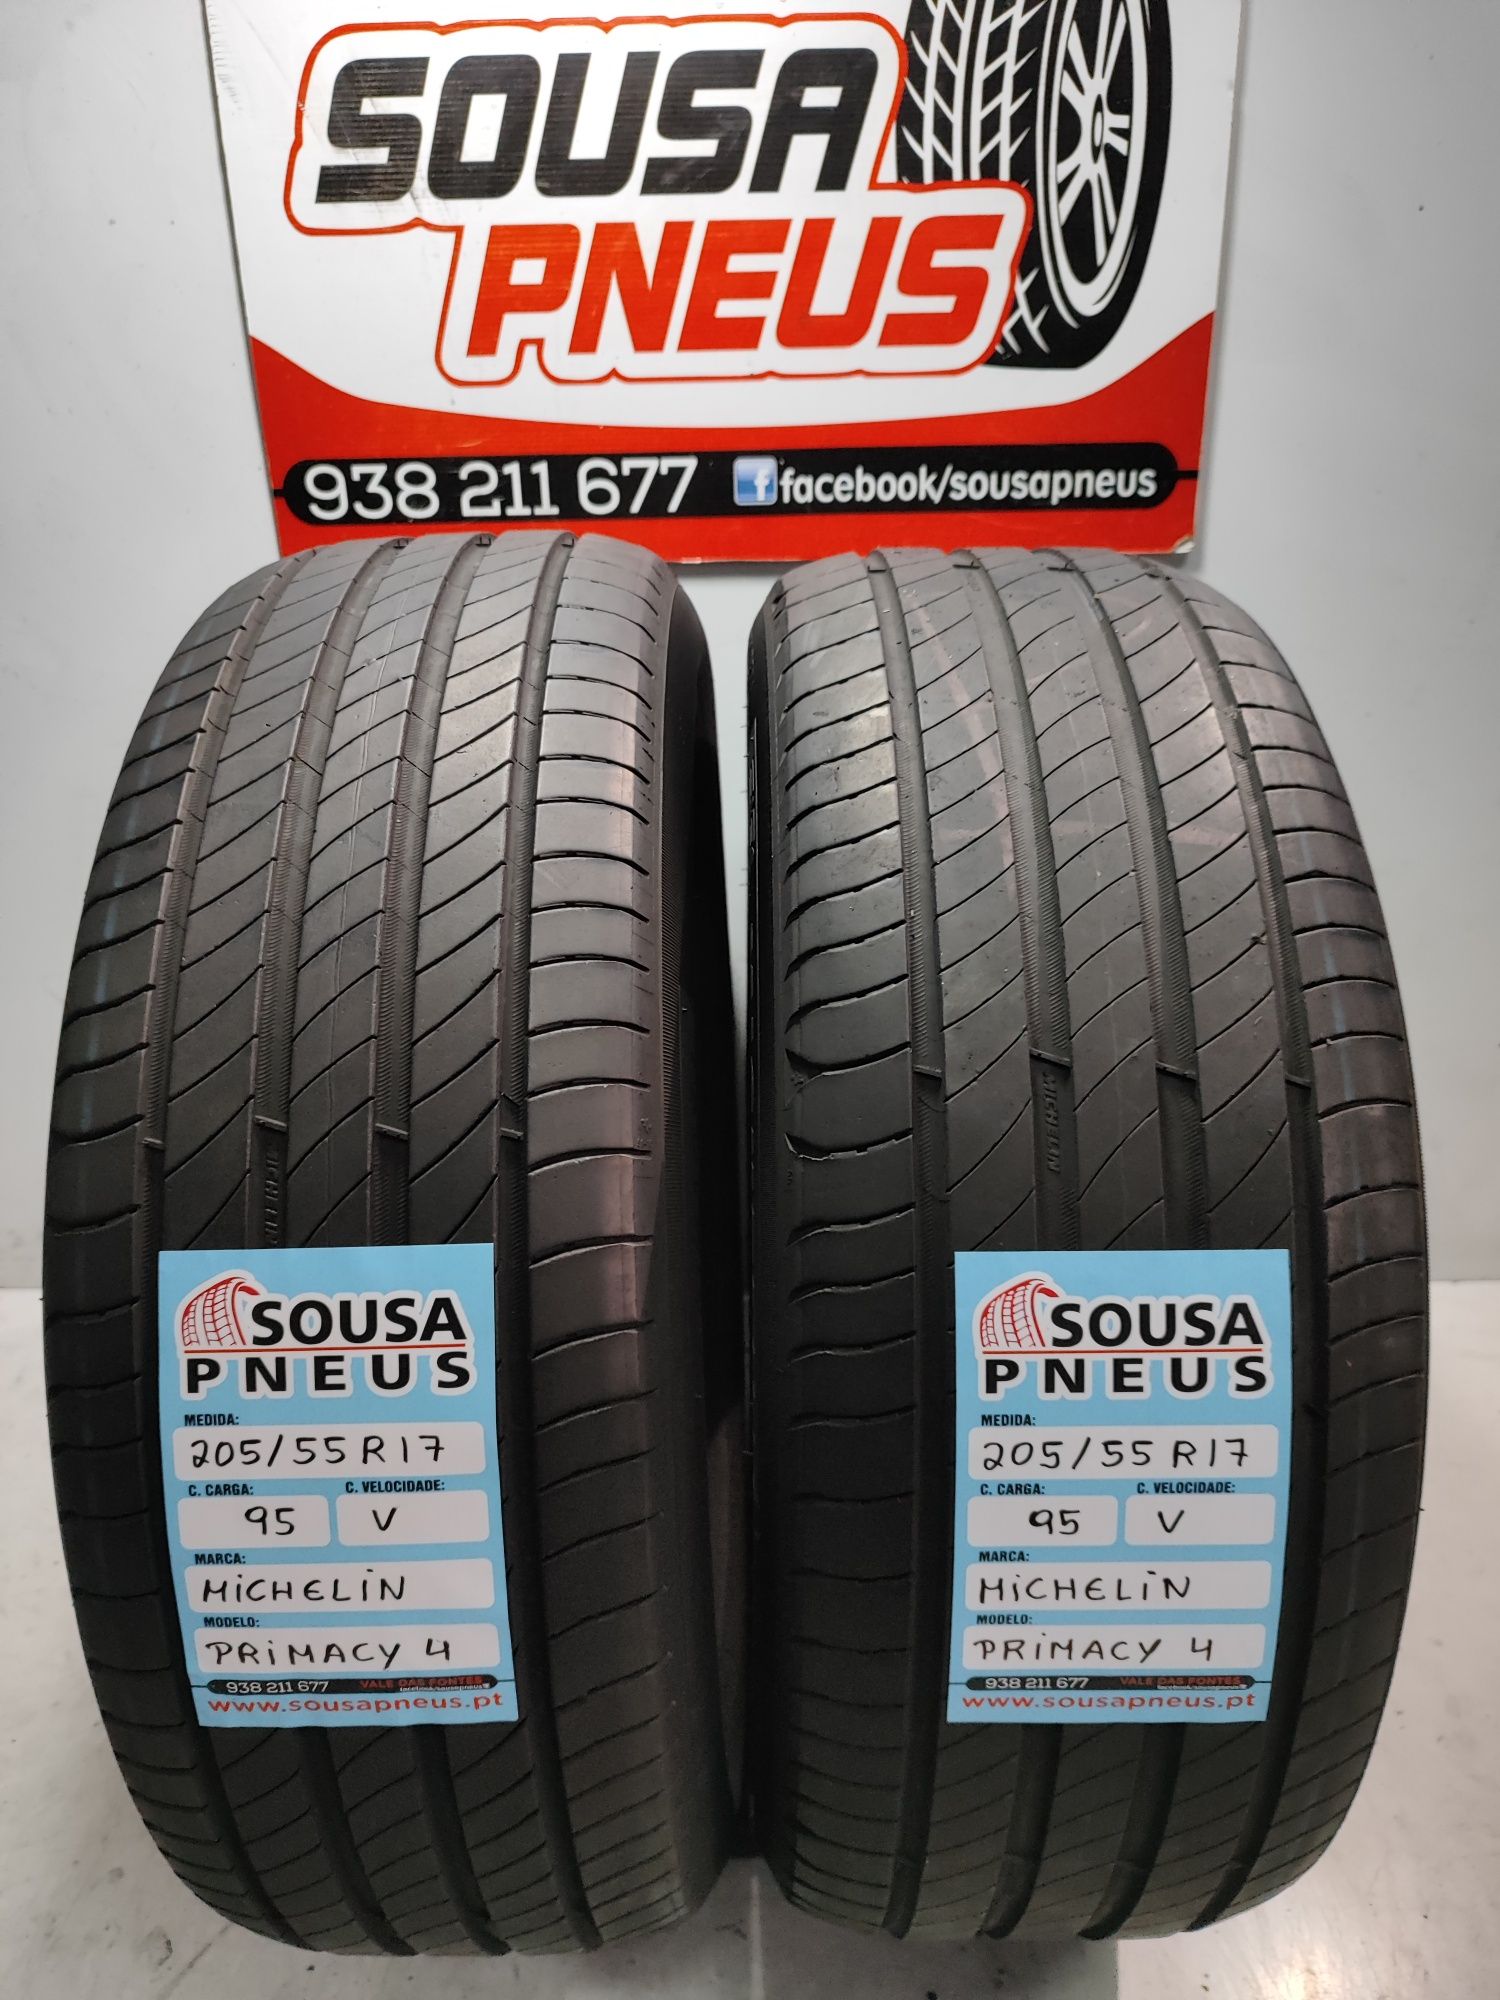 2 pneus semi novos Michelin Primacy 4 205/55R17 95V Oferta dos Portes